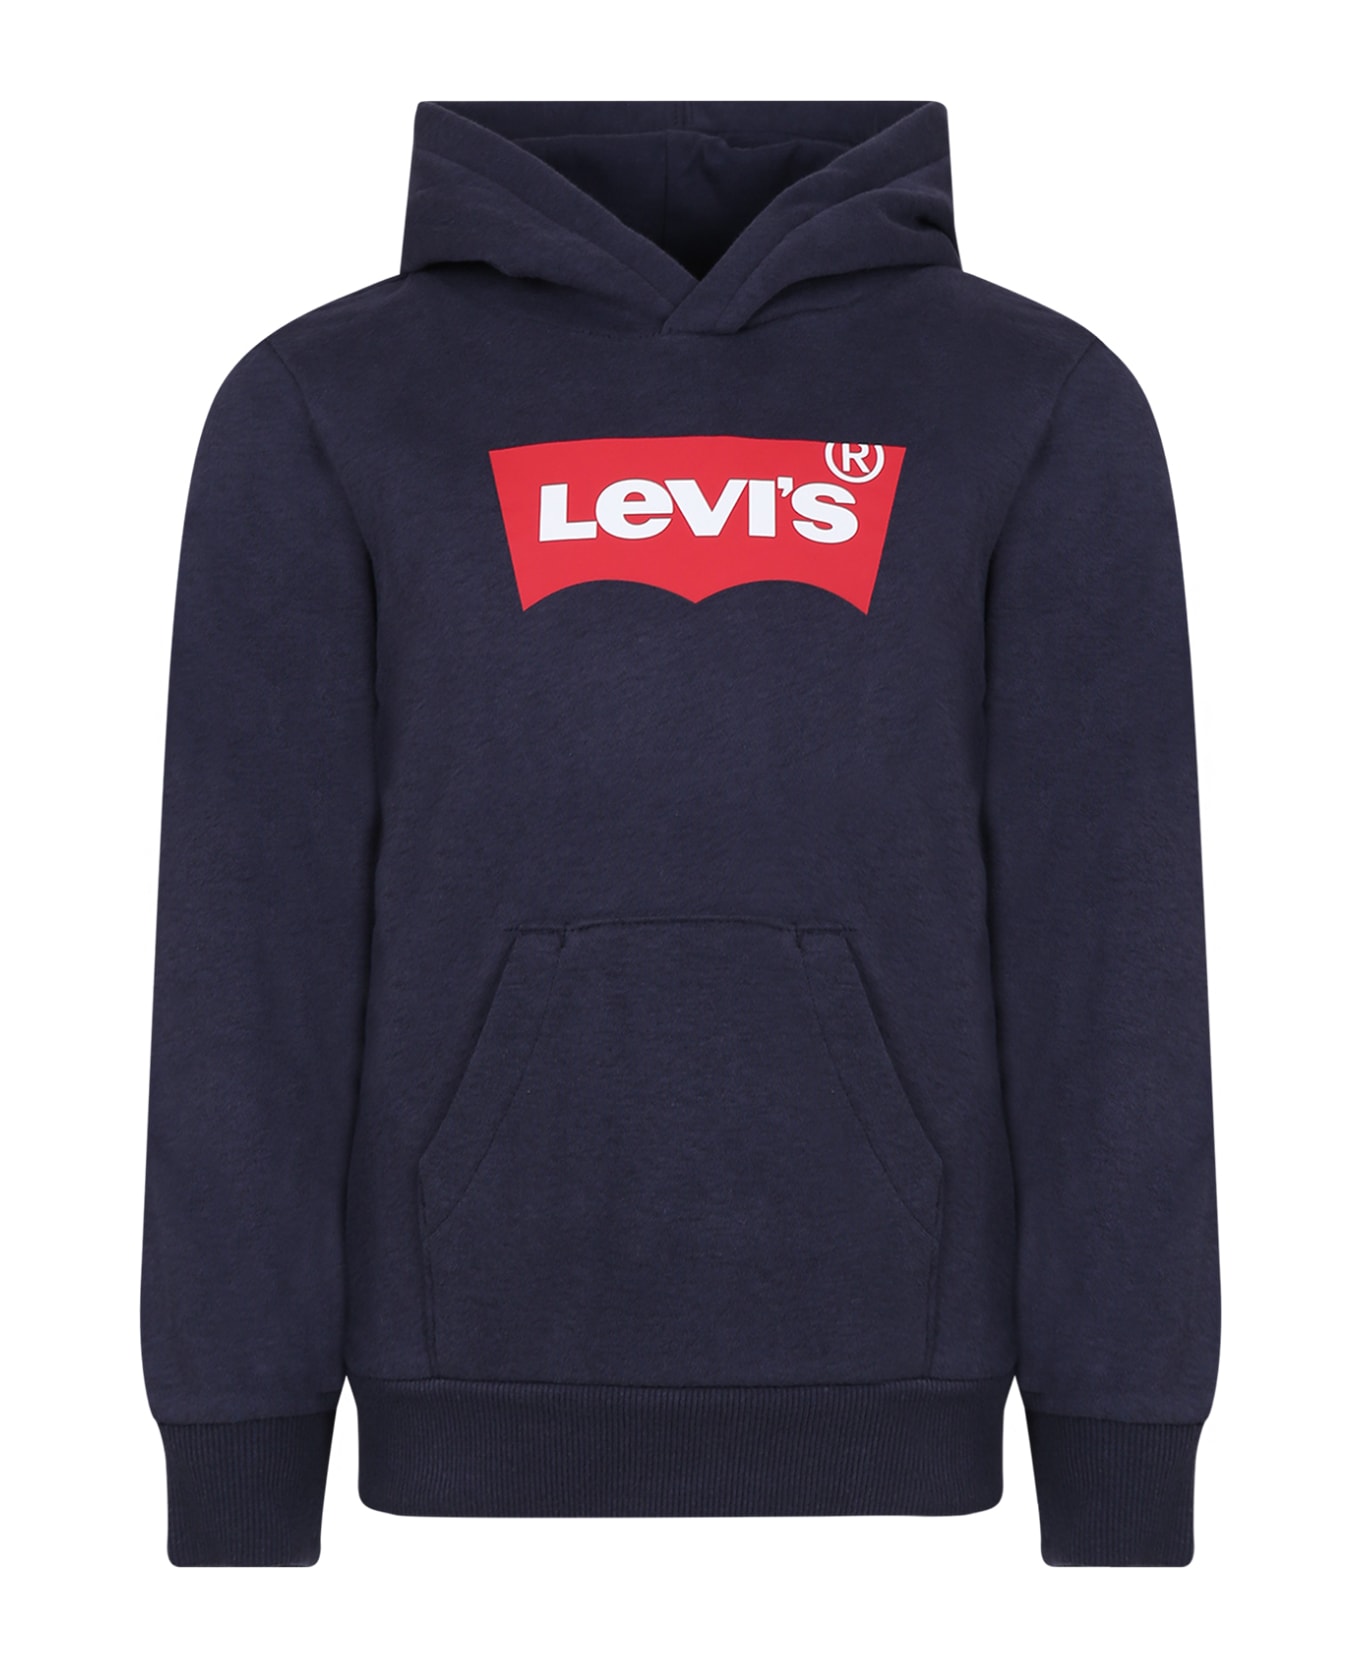 Levi's Blue Sweatshirt For Kids With Logo - Blue